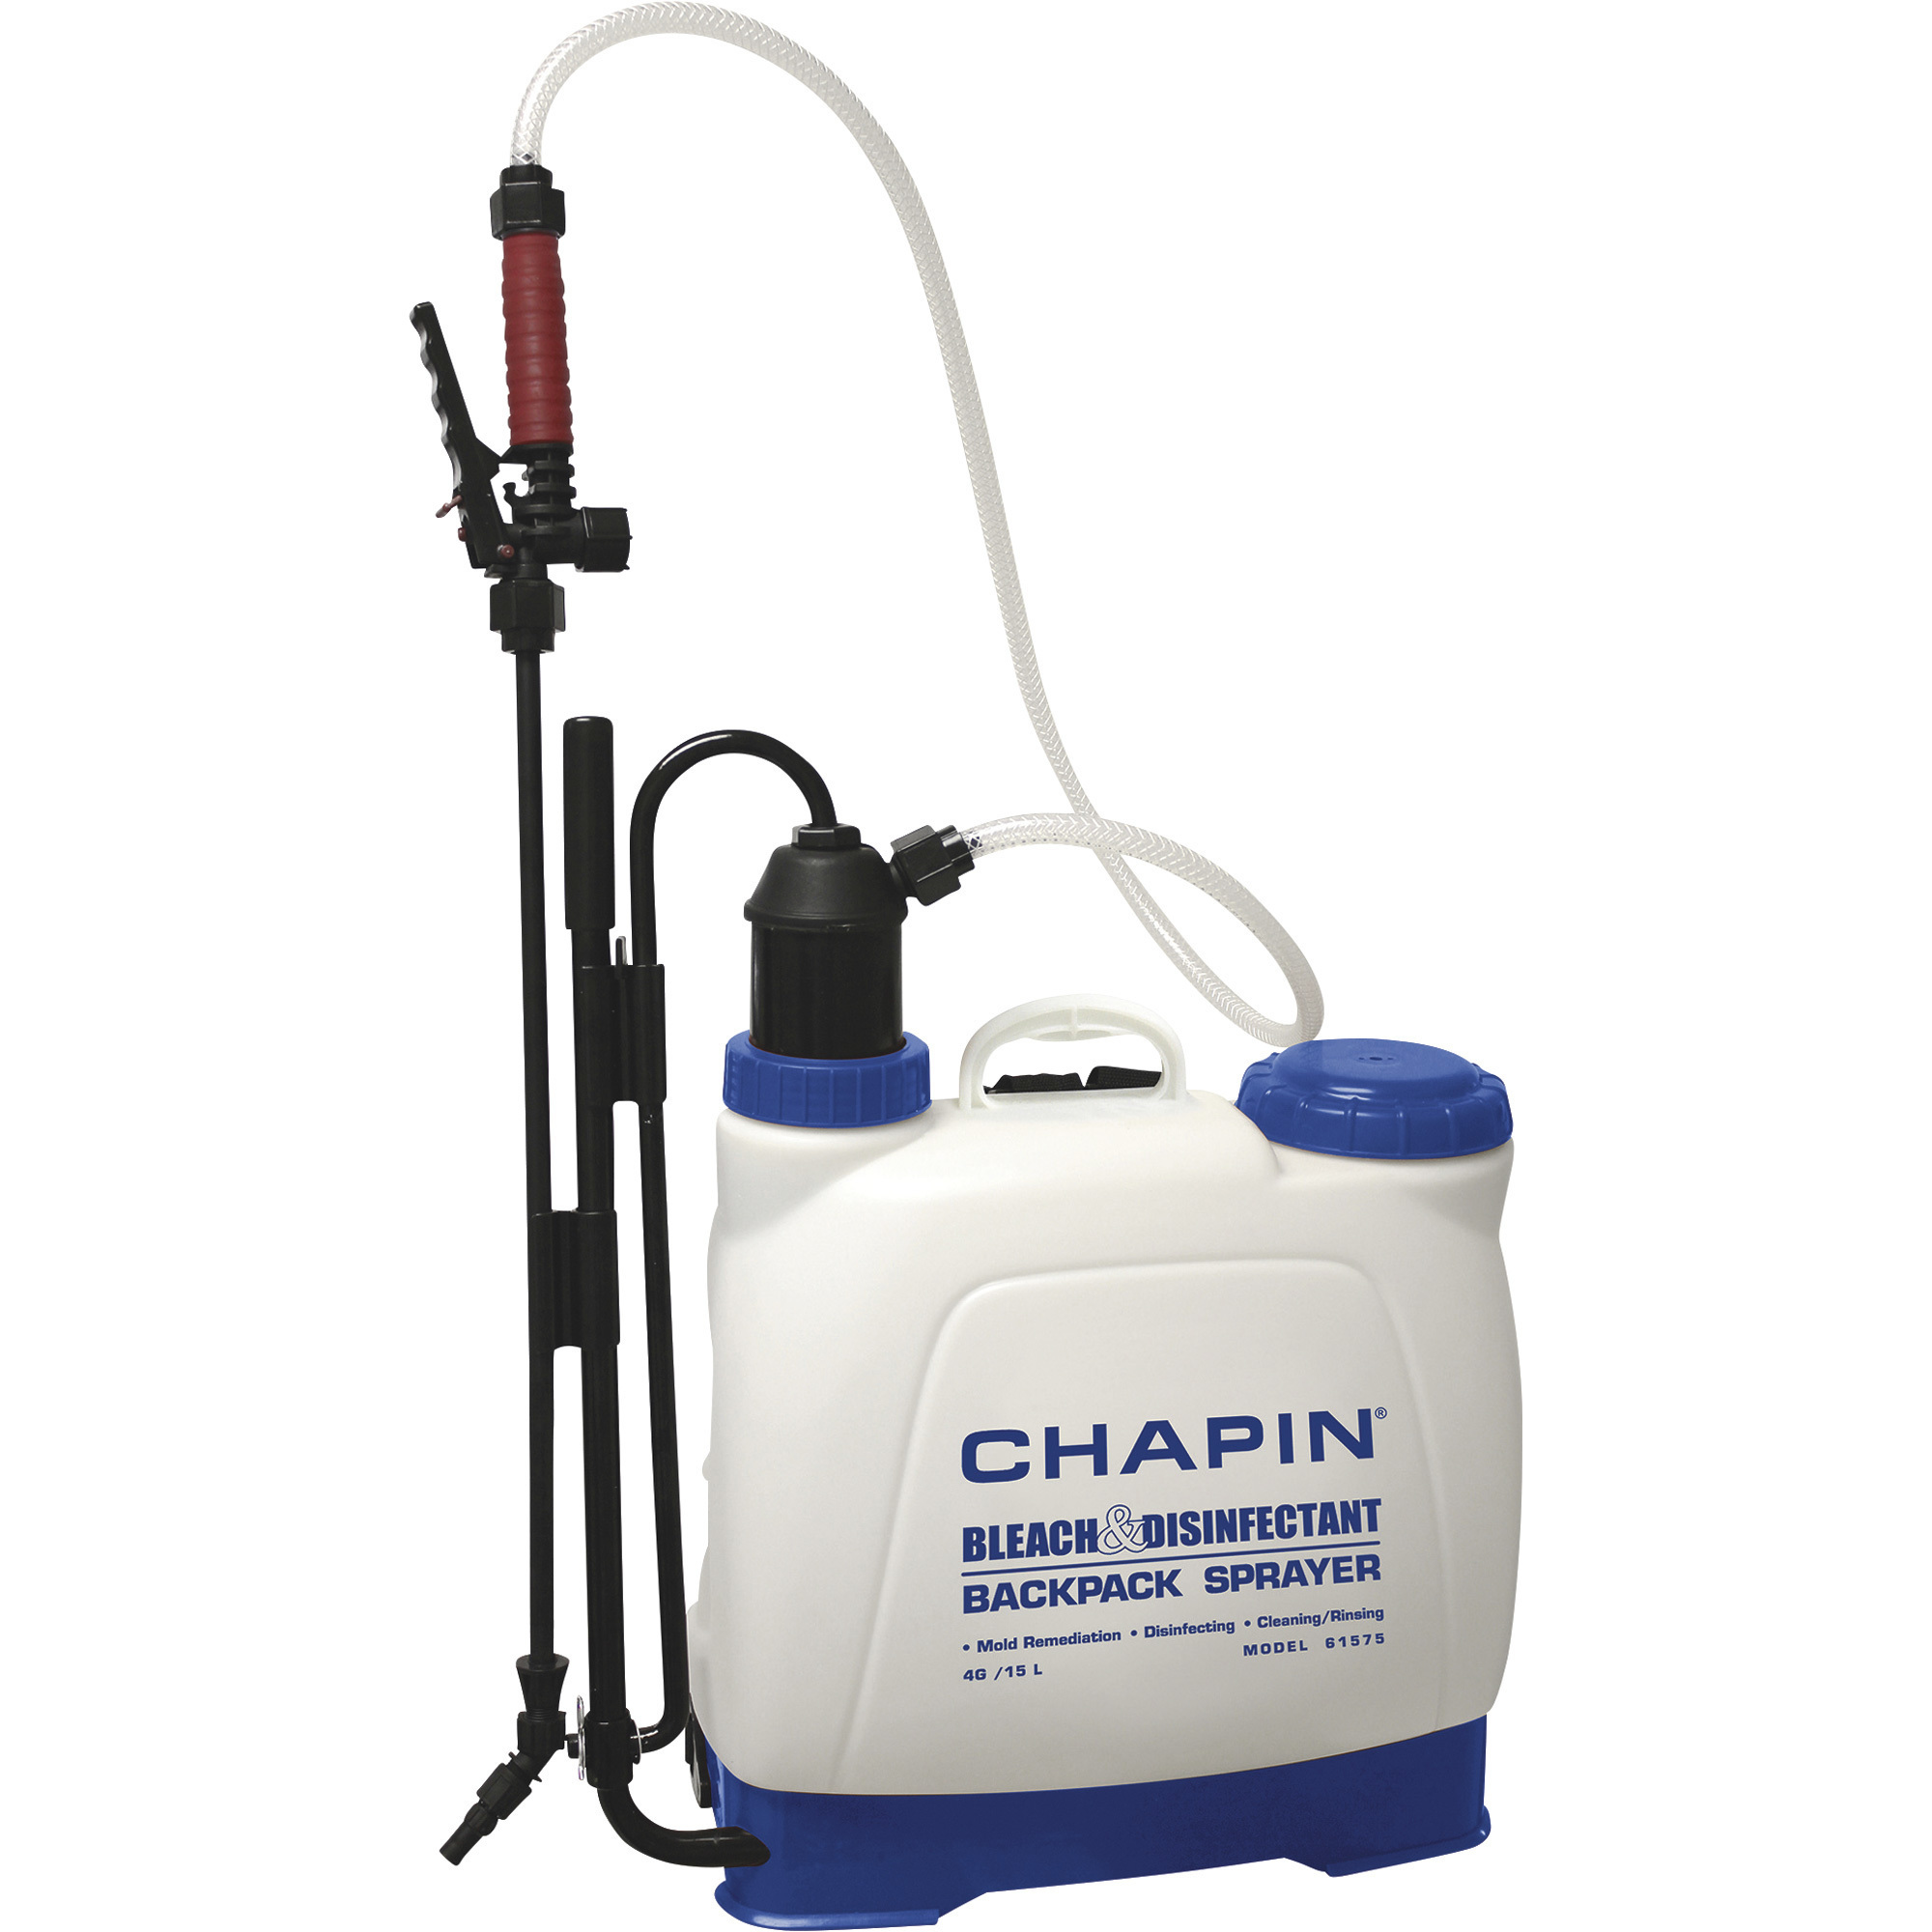 Chapin 4-Gallon Disinfectant Bleach Backpack Sprayer, Model 61575